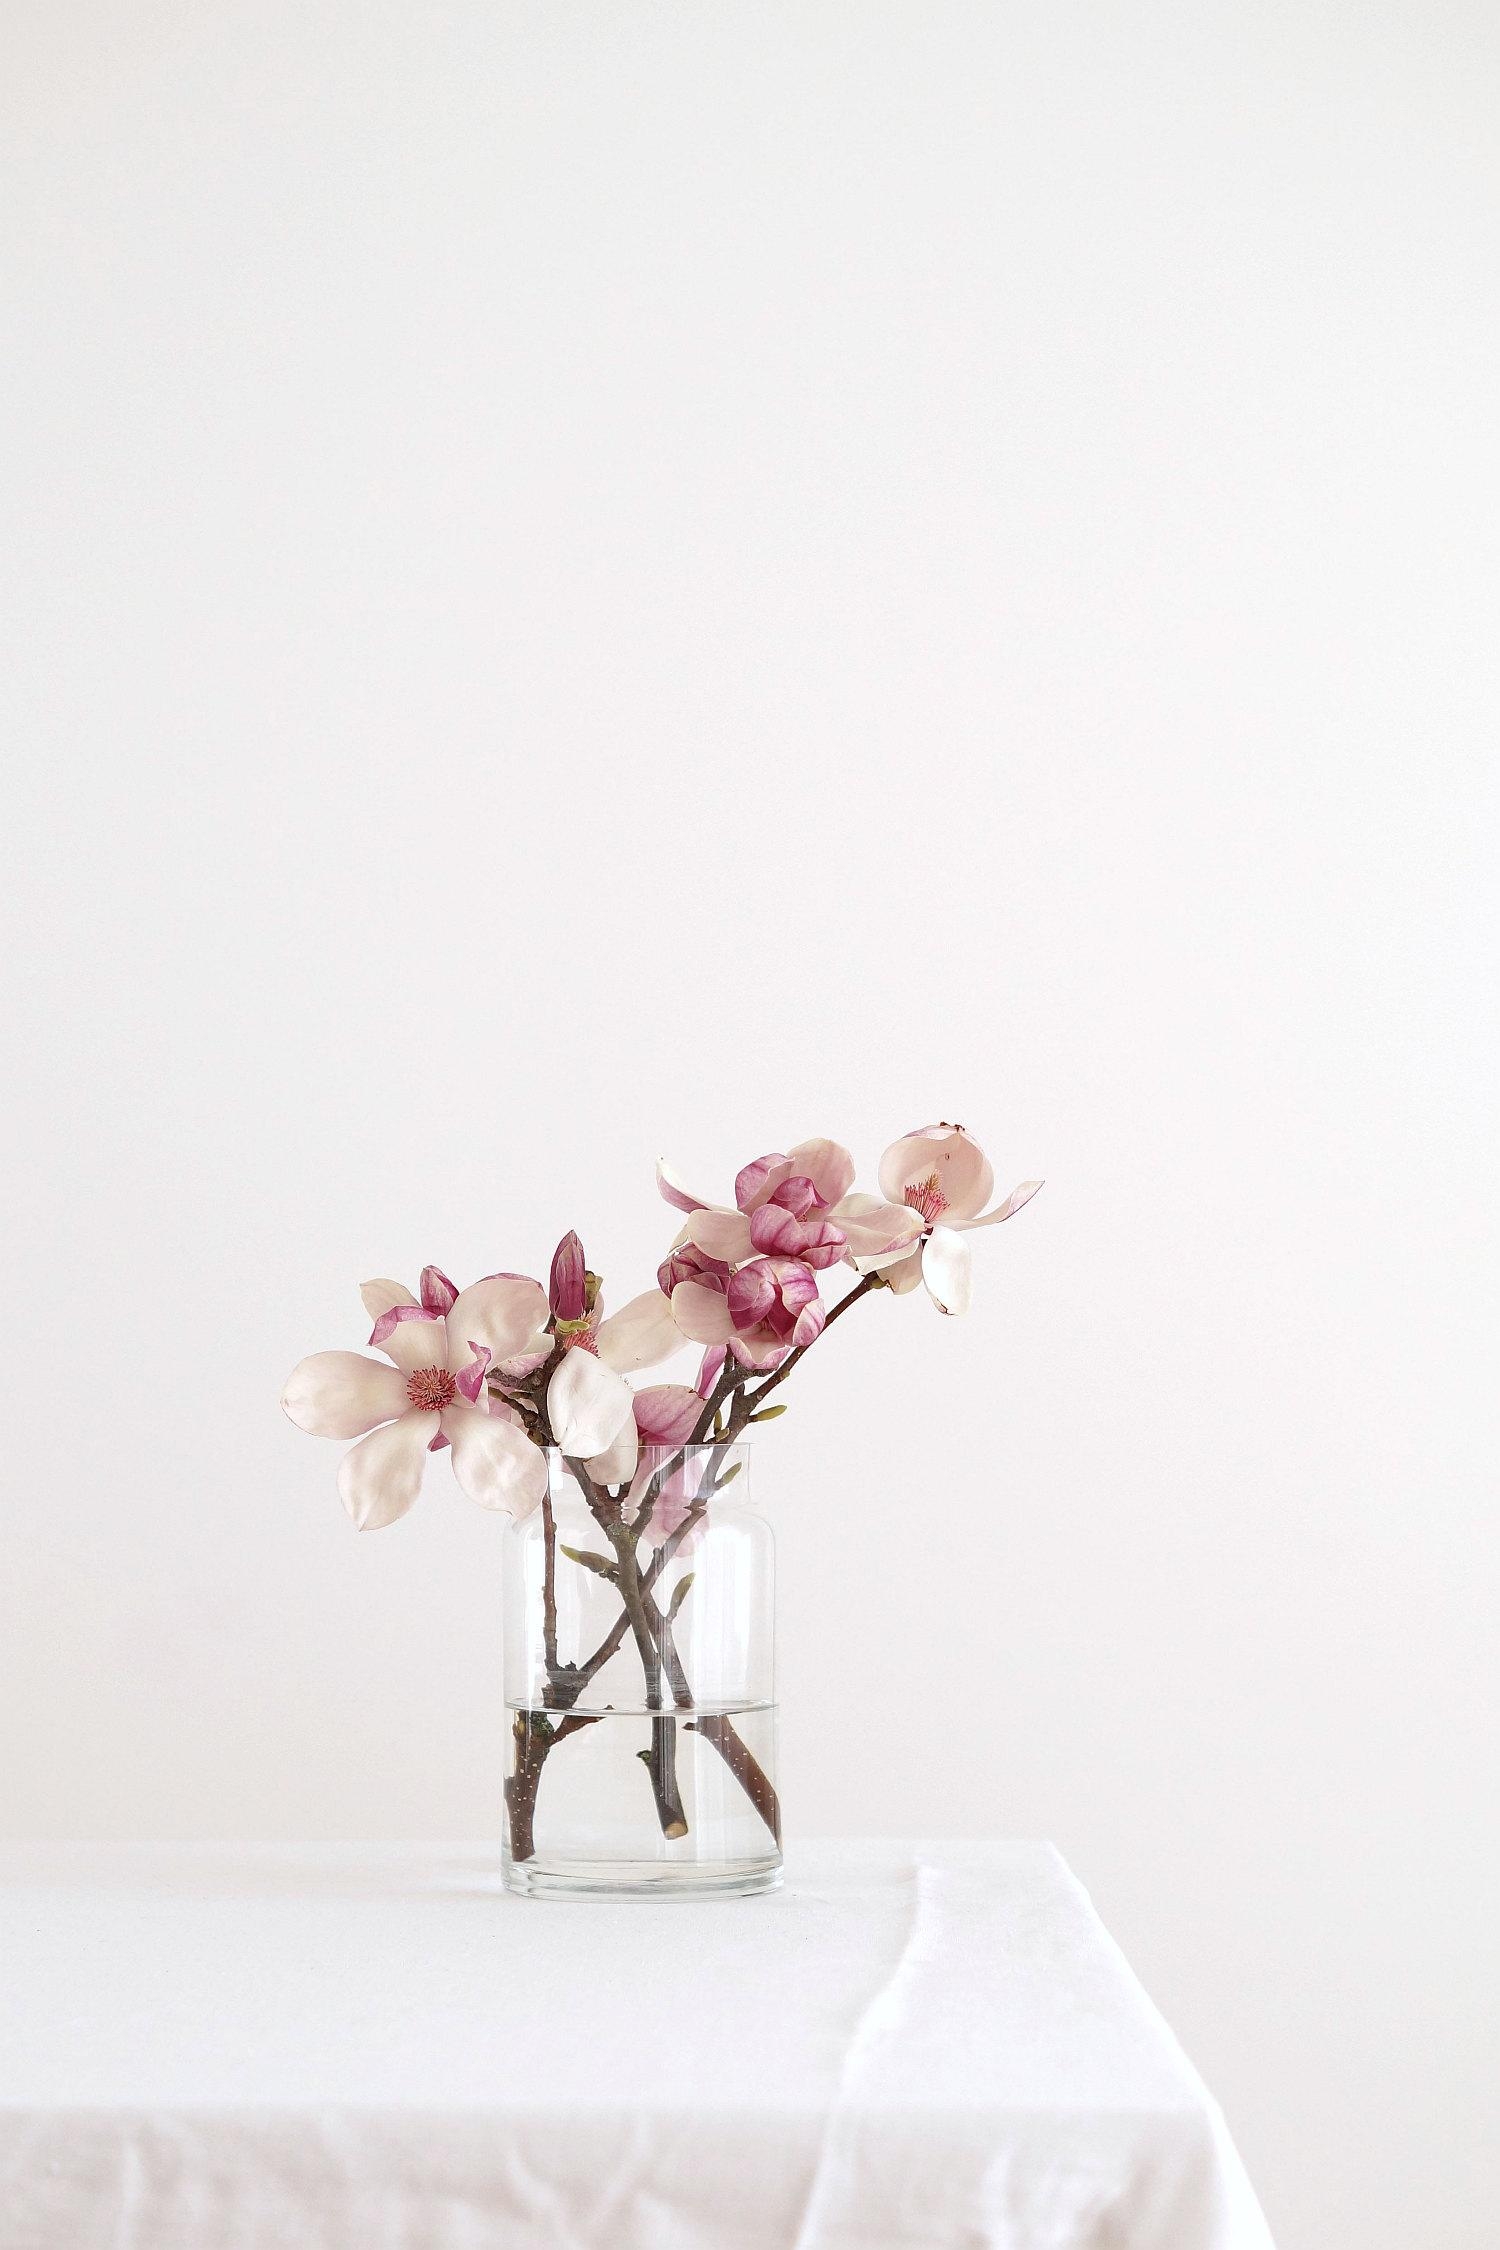 #magnolien #minimalismus #hygge #frühling #frühlingsdeko #weiß #rosa